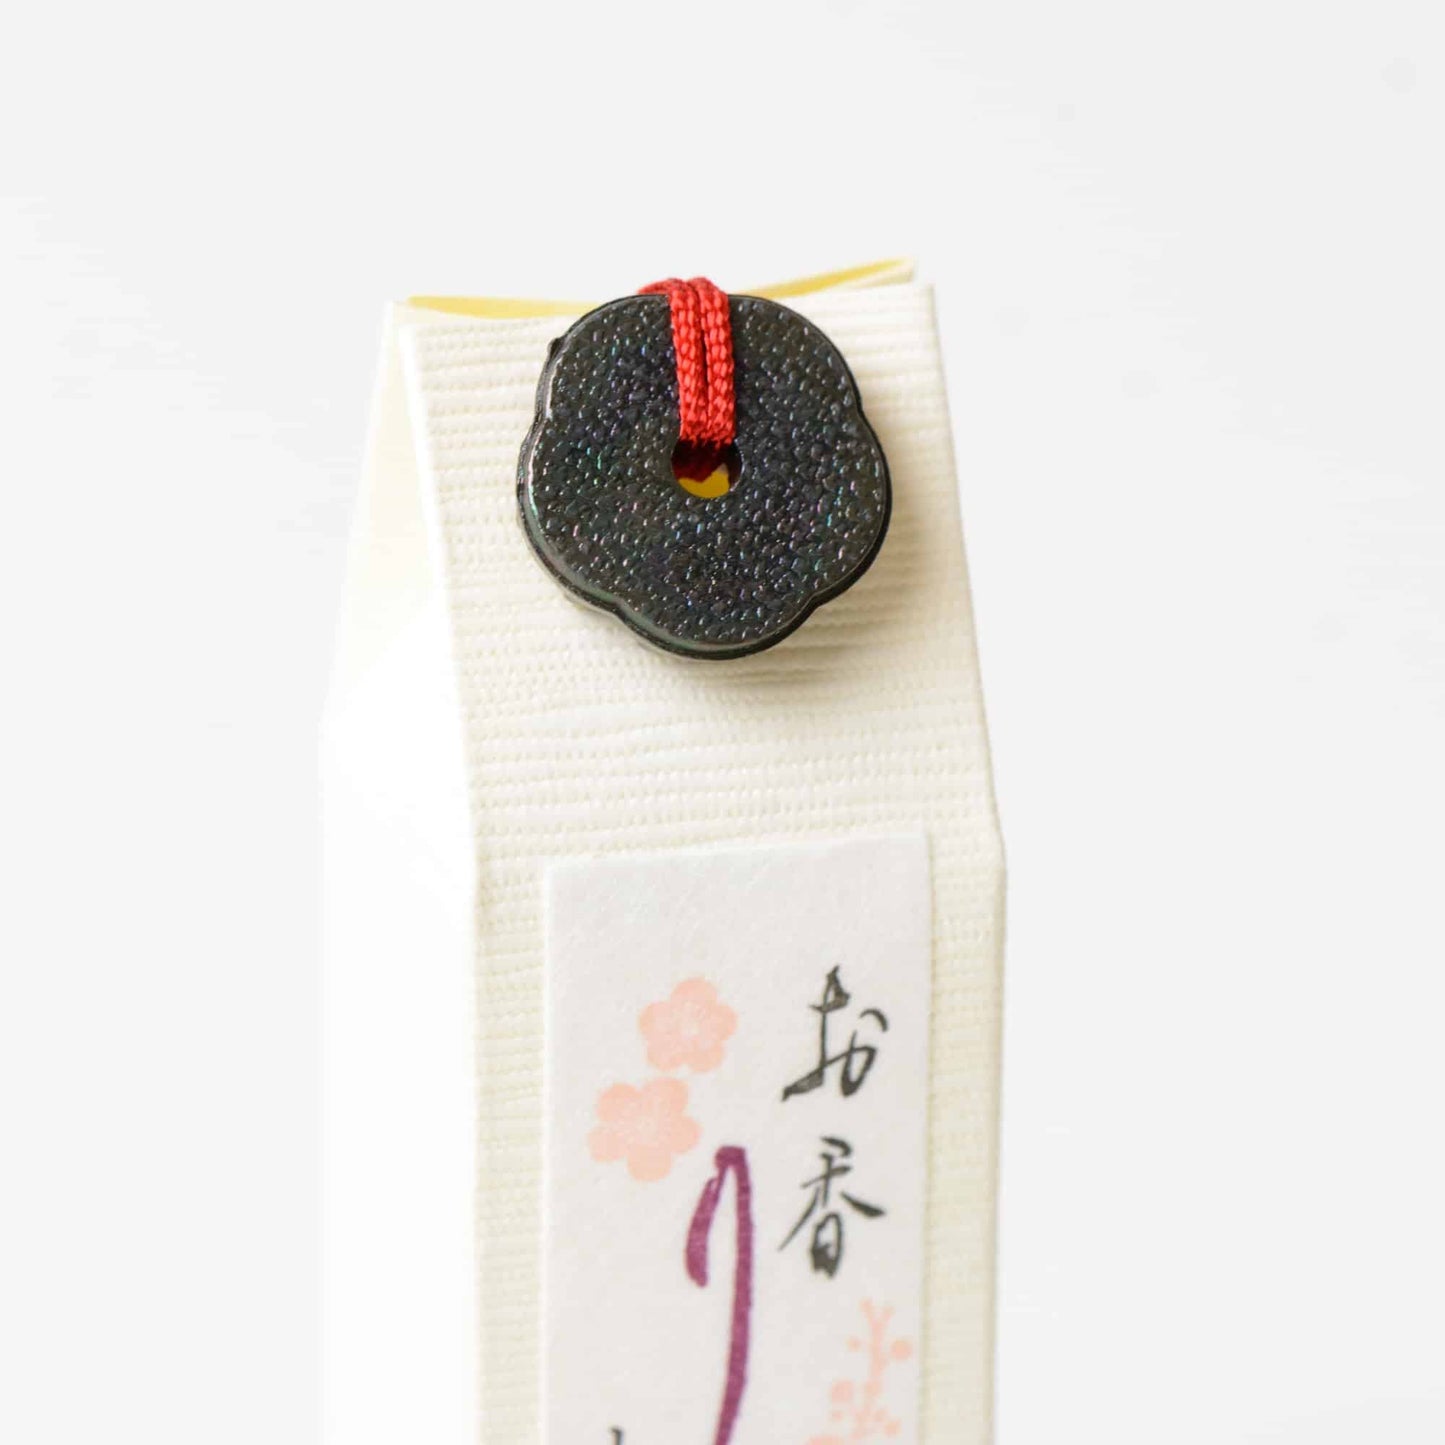 Japanese Incense - Riraku - 15 sticks